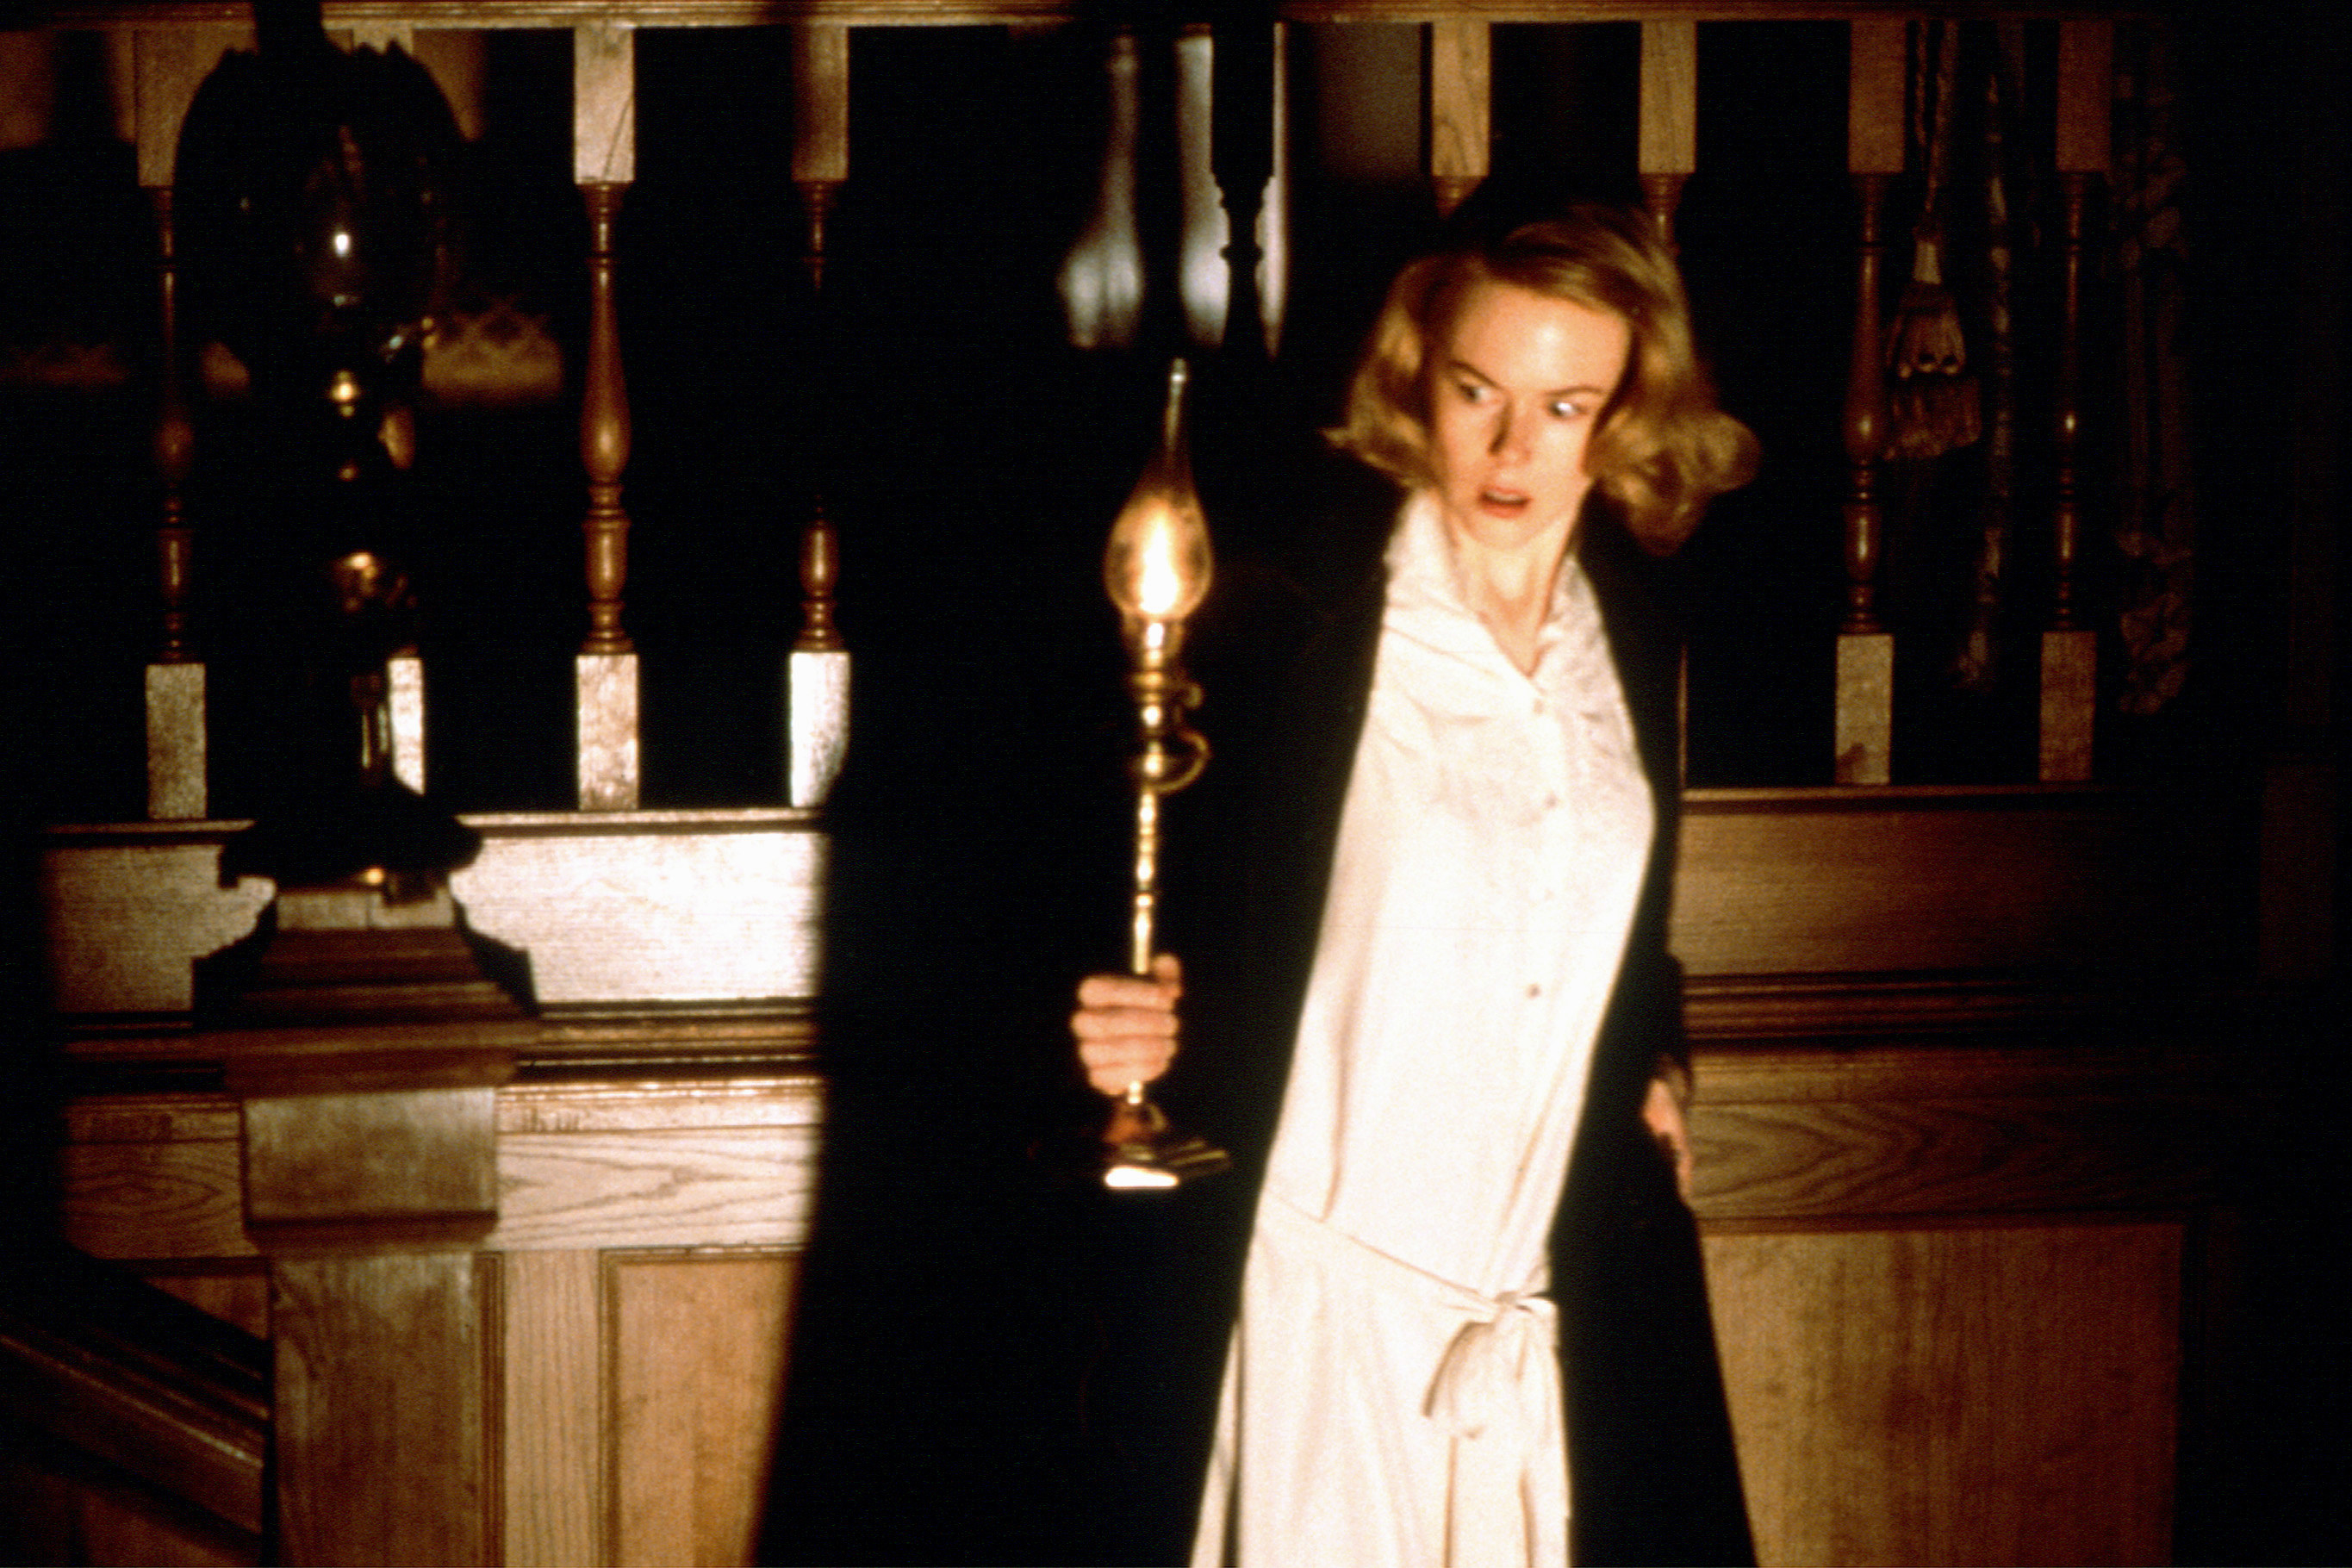 Nicole Kidman holds a lantern in a bathrobe